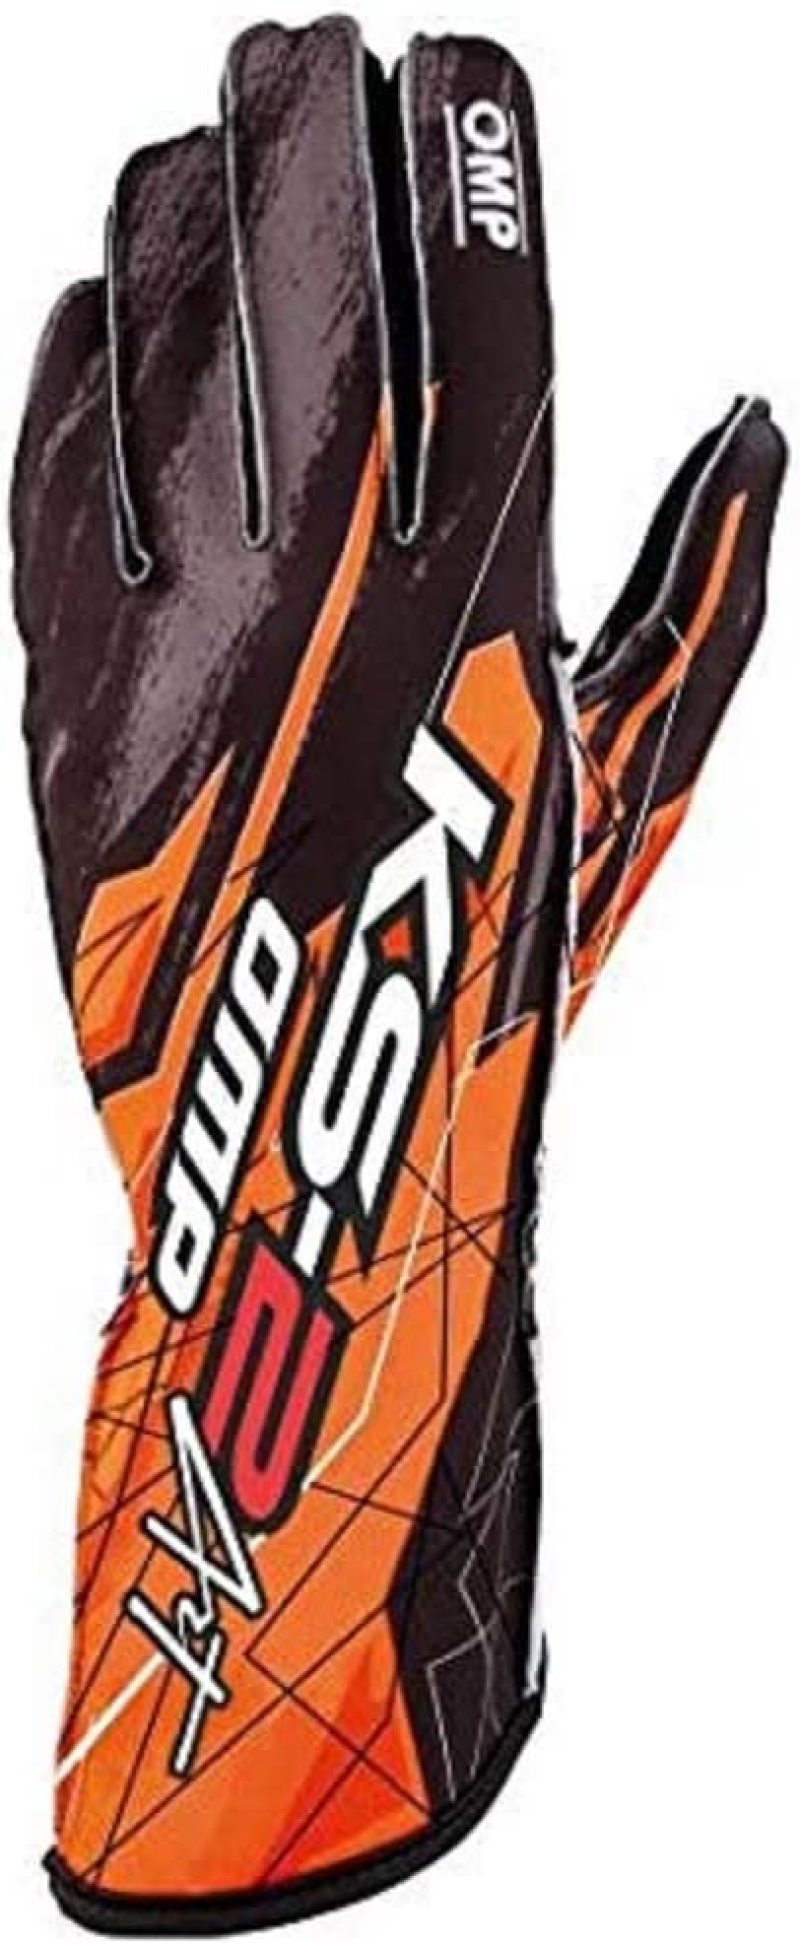 OMP KS-2 Art Gloves Black/Orange - Size M - KB0-2748-A01-179-M